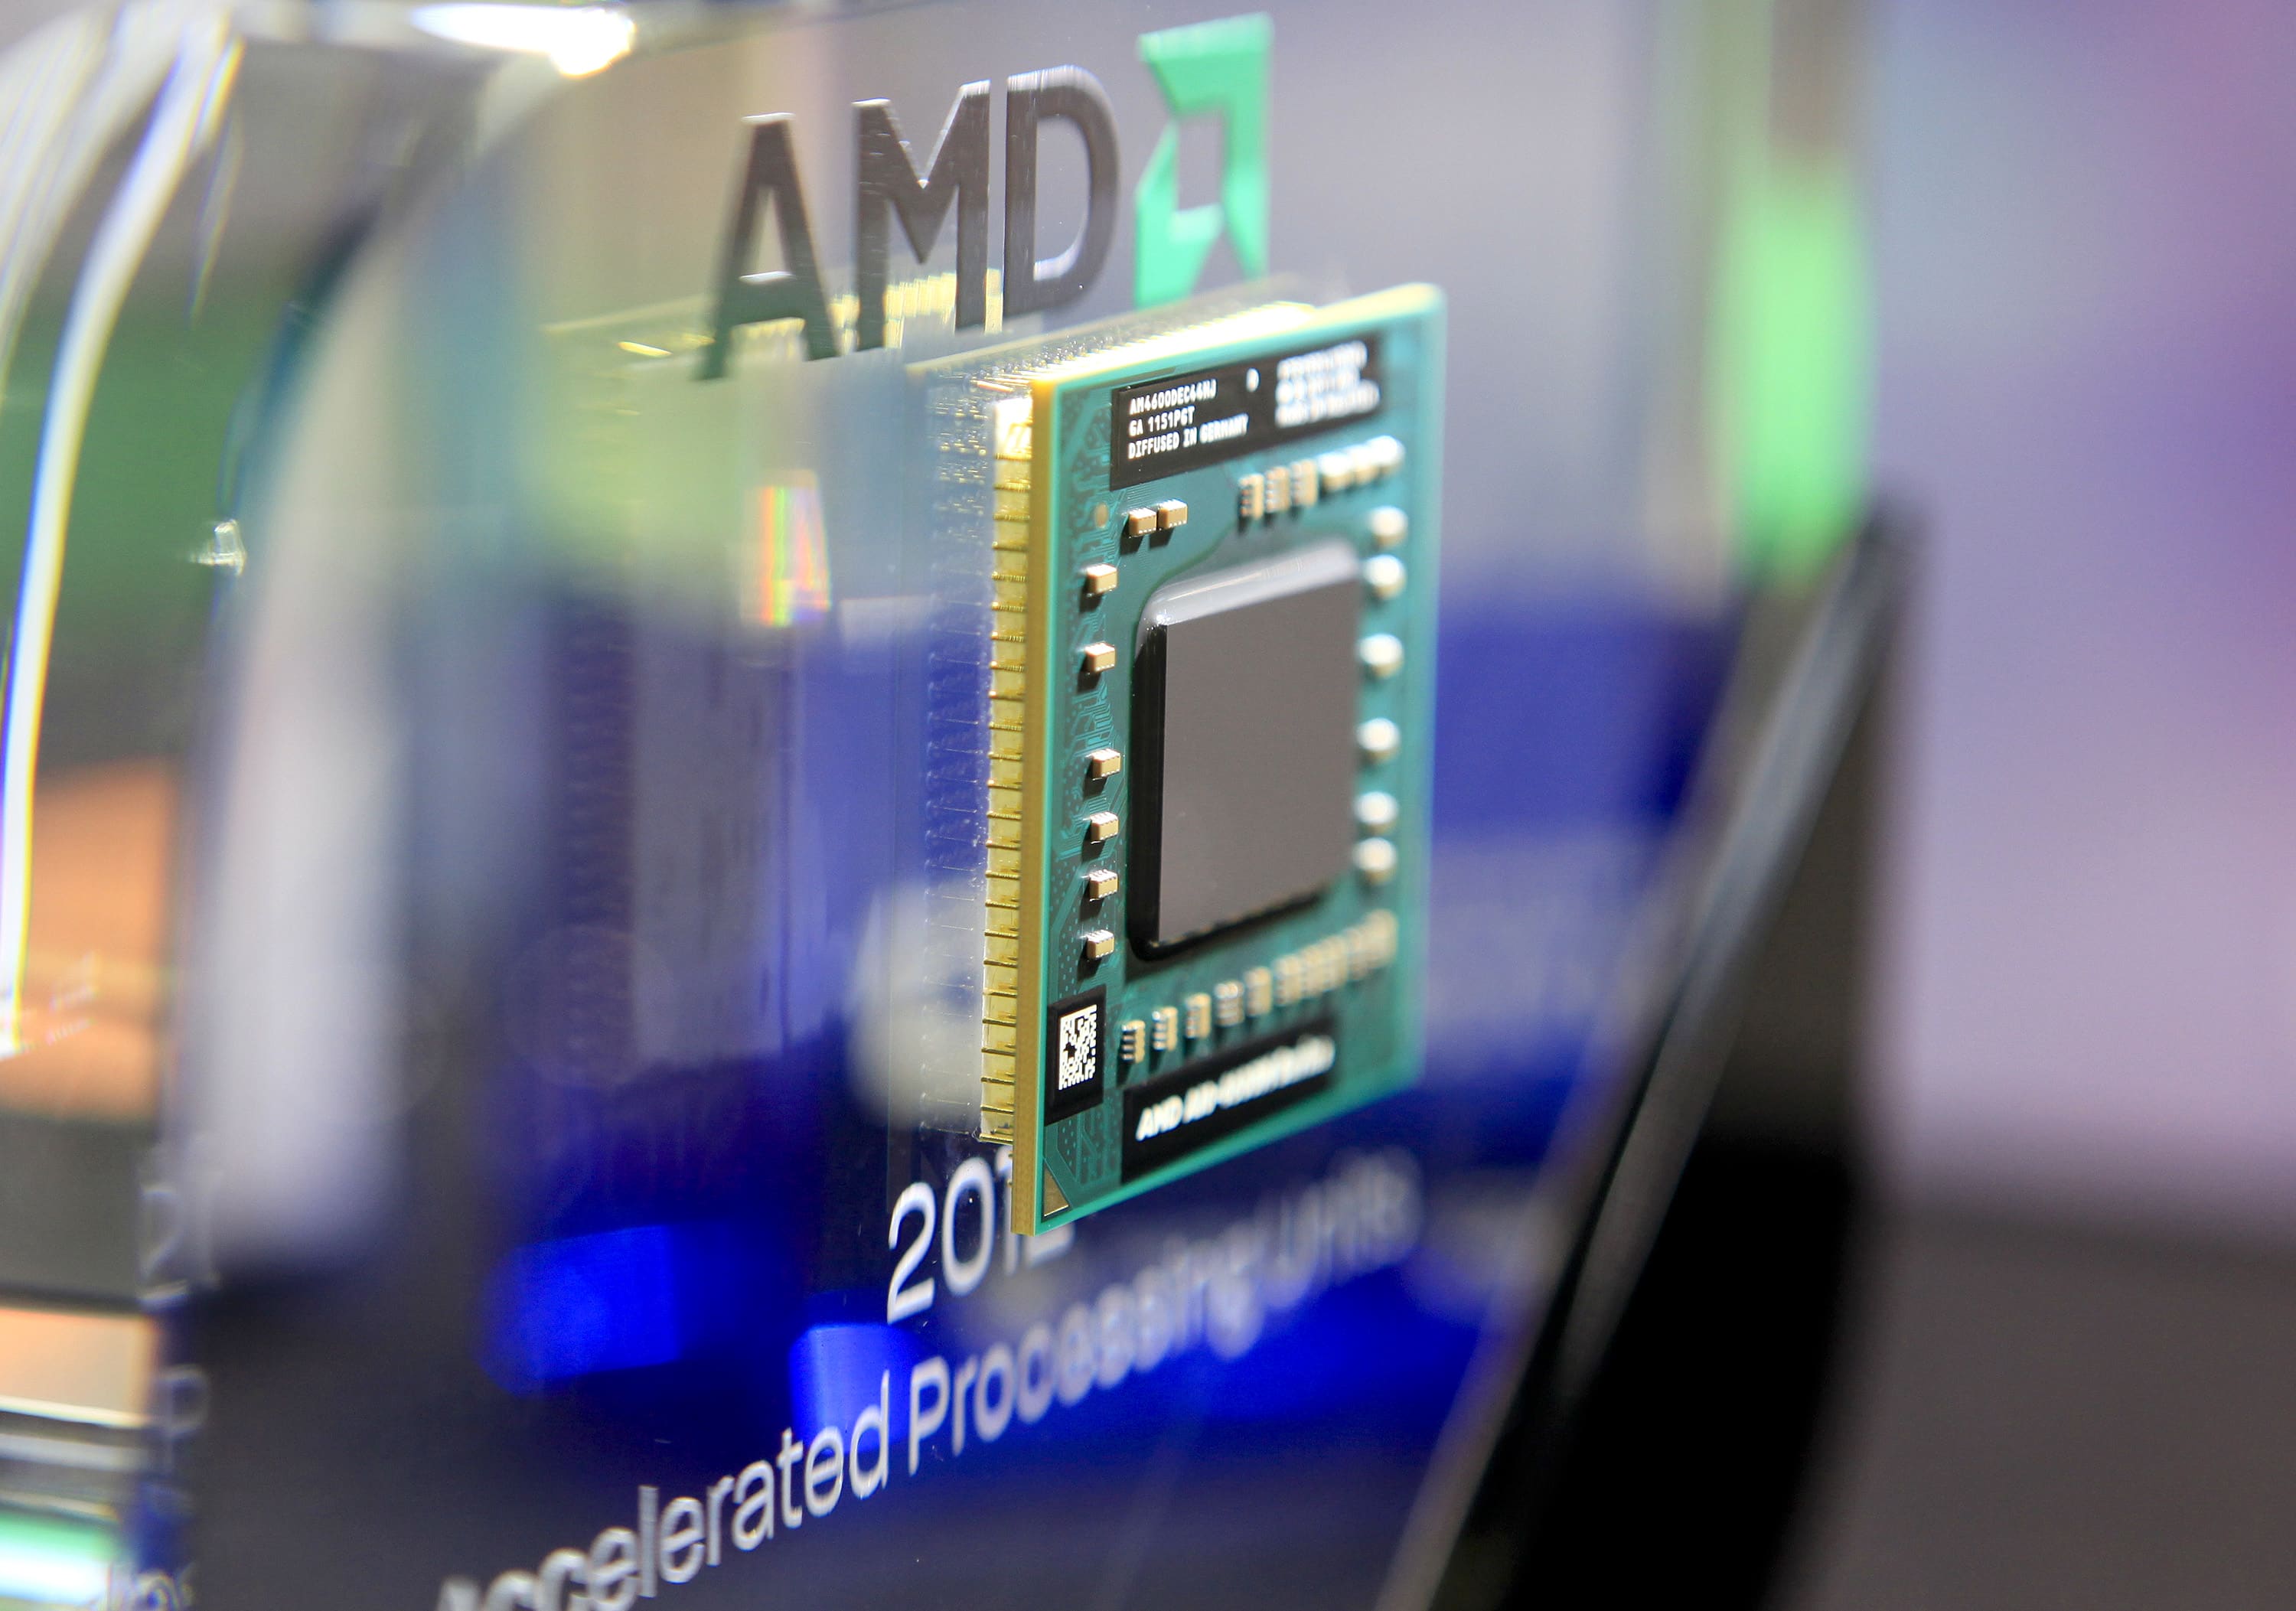 Bernstein downgrades AMD as personal computer market worsens